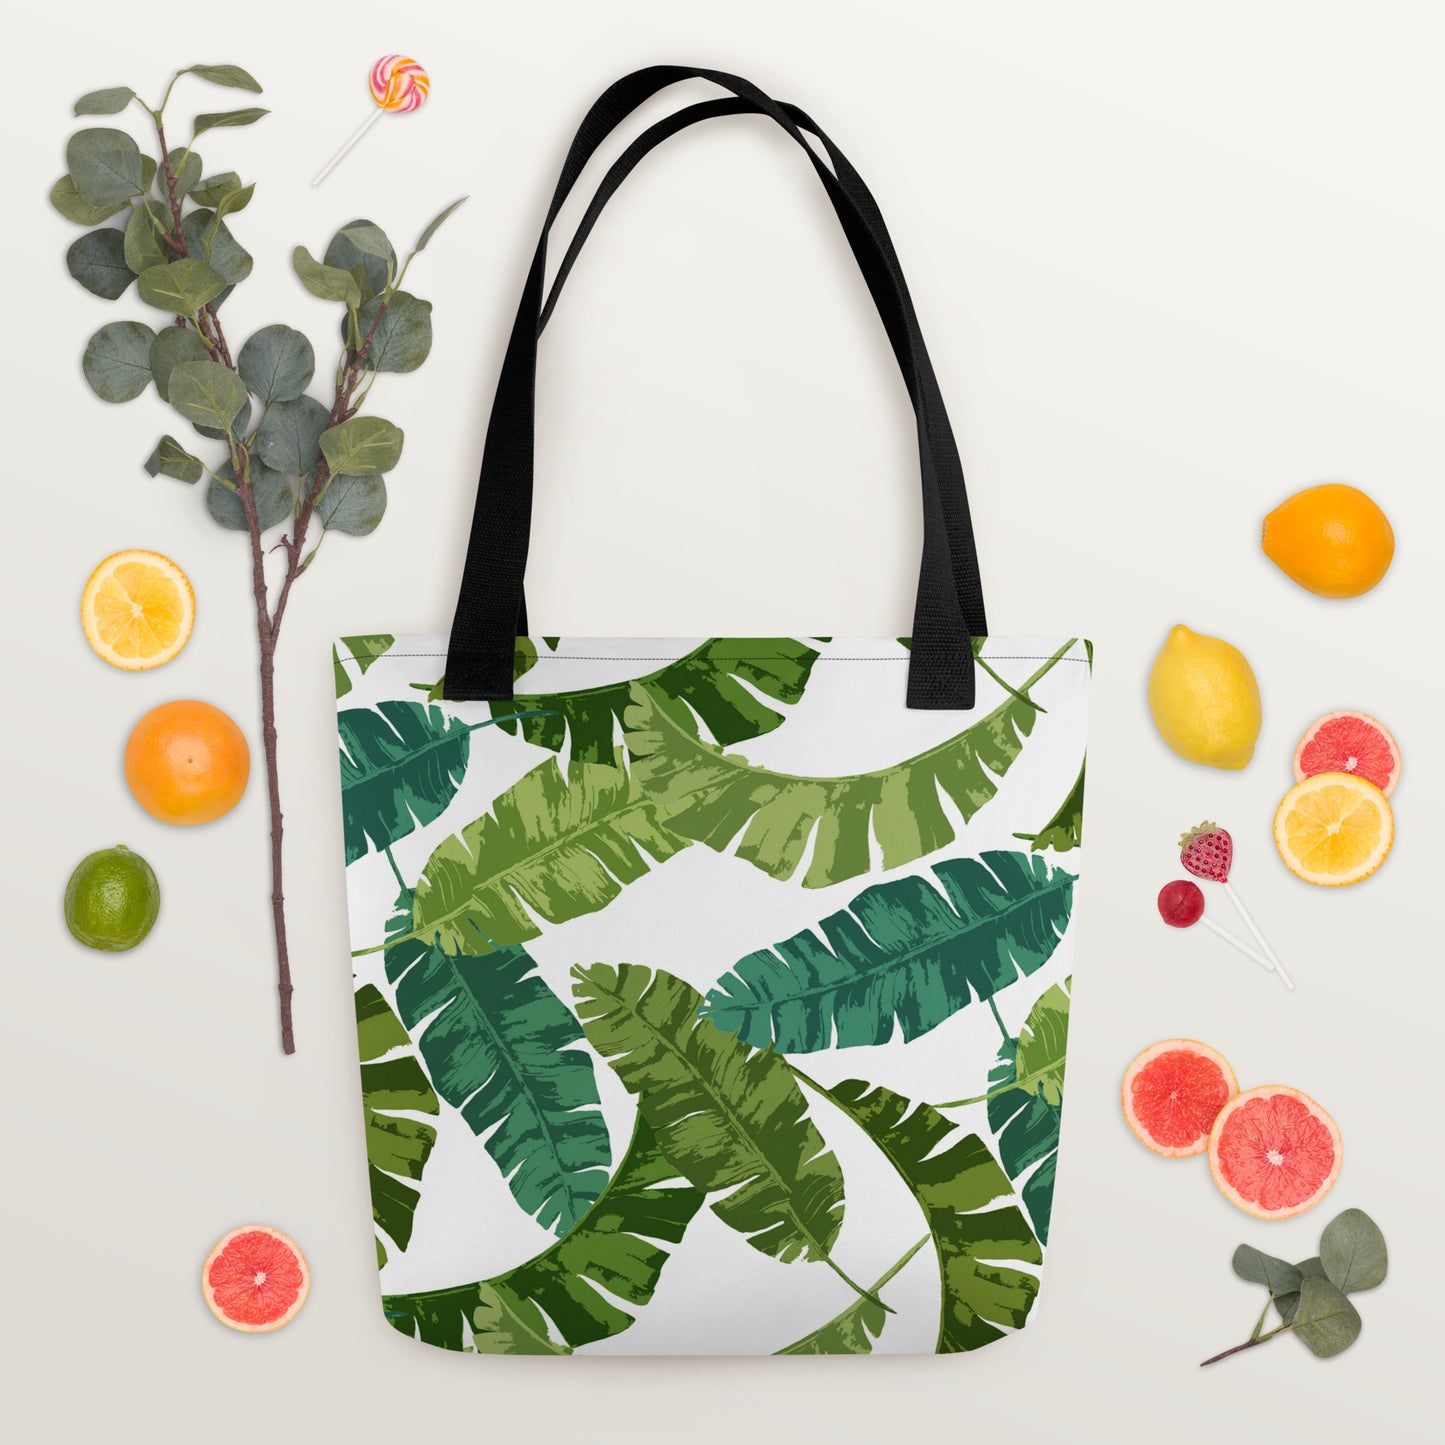 Tropical Leaves Tote Bag